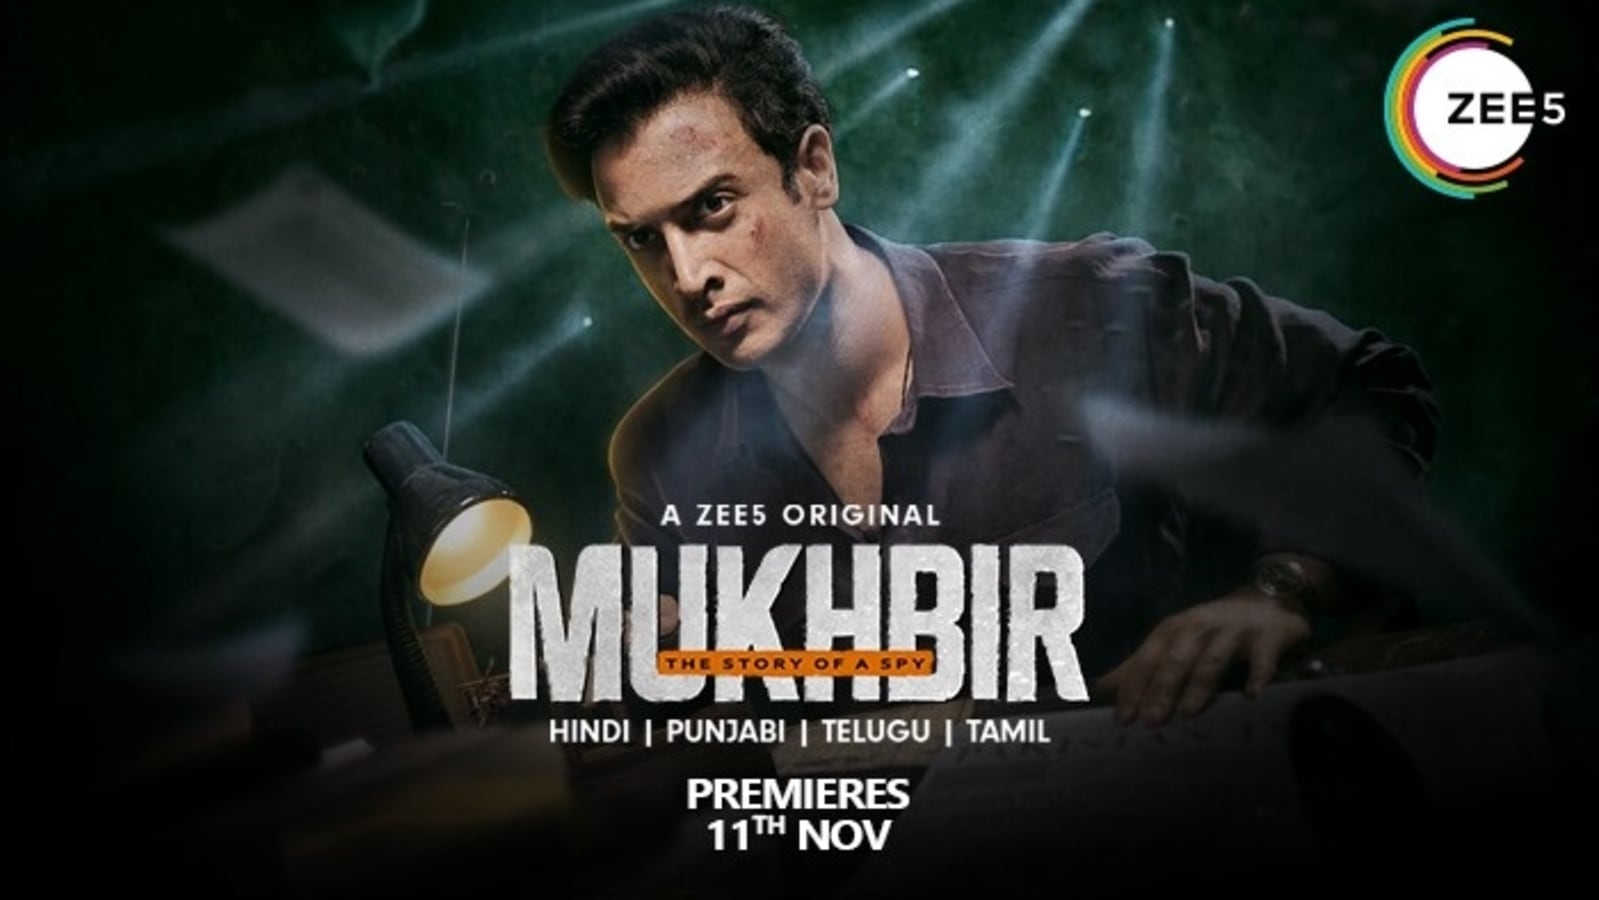 Mukhbir The Story of a Spyalt